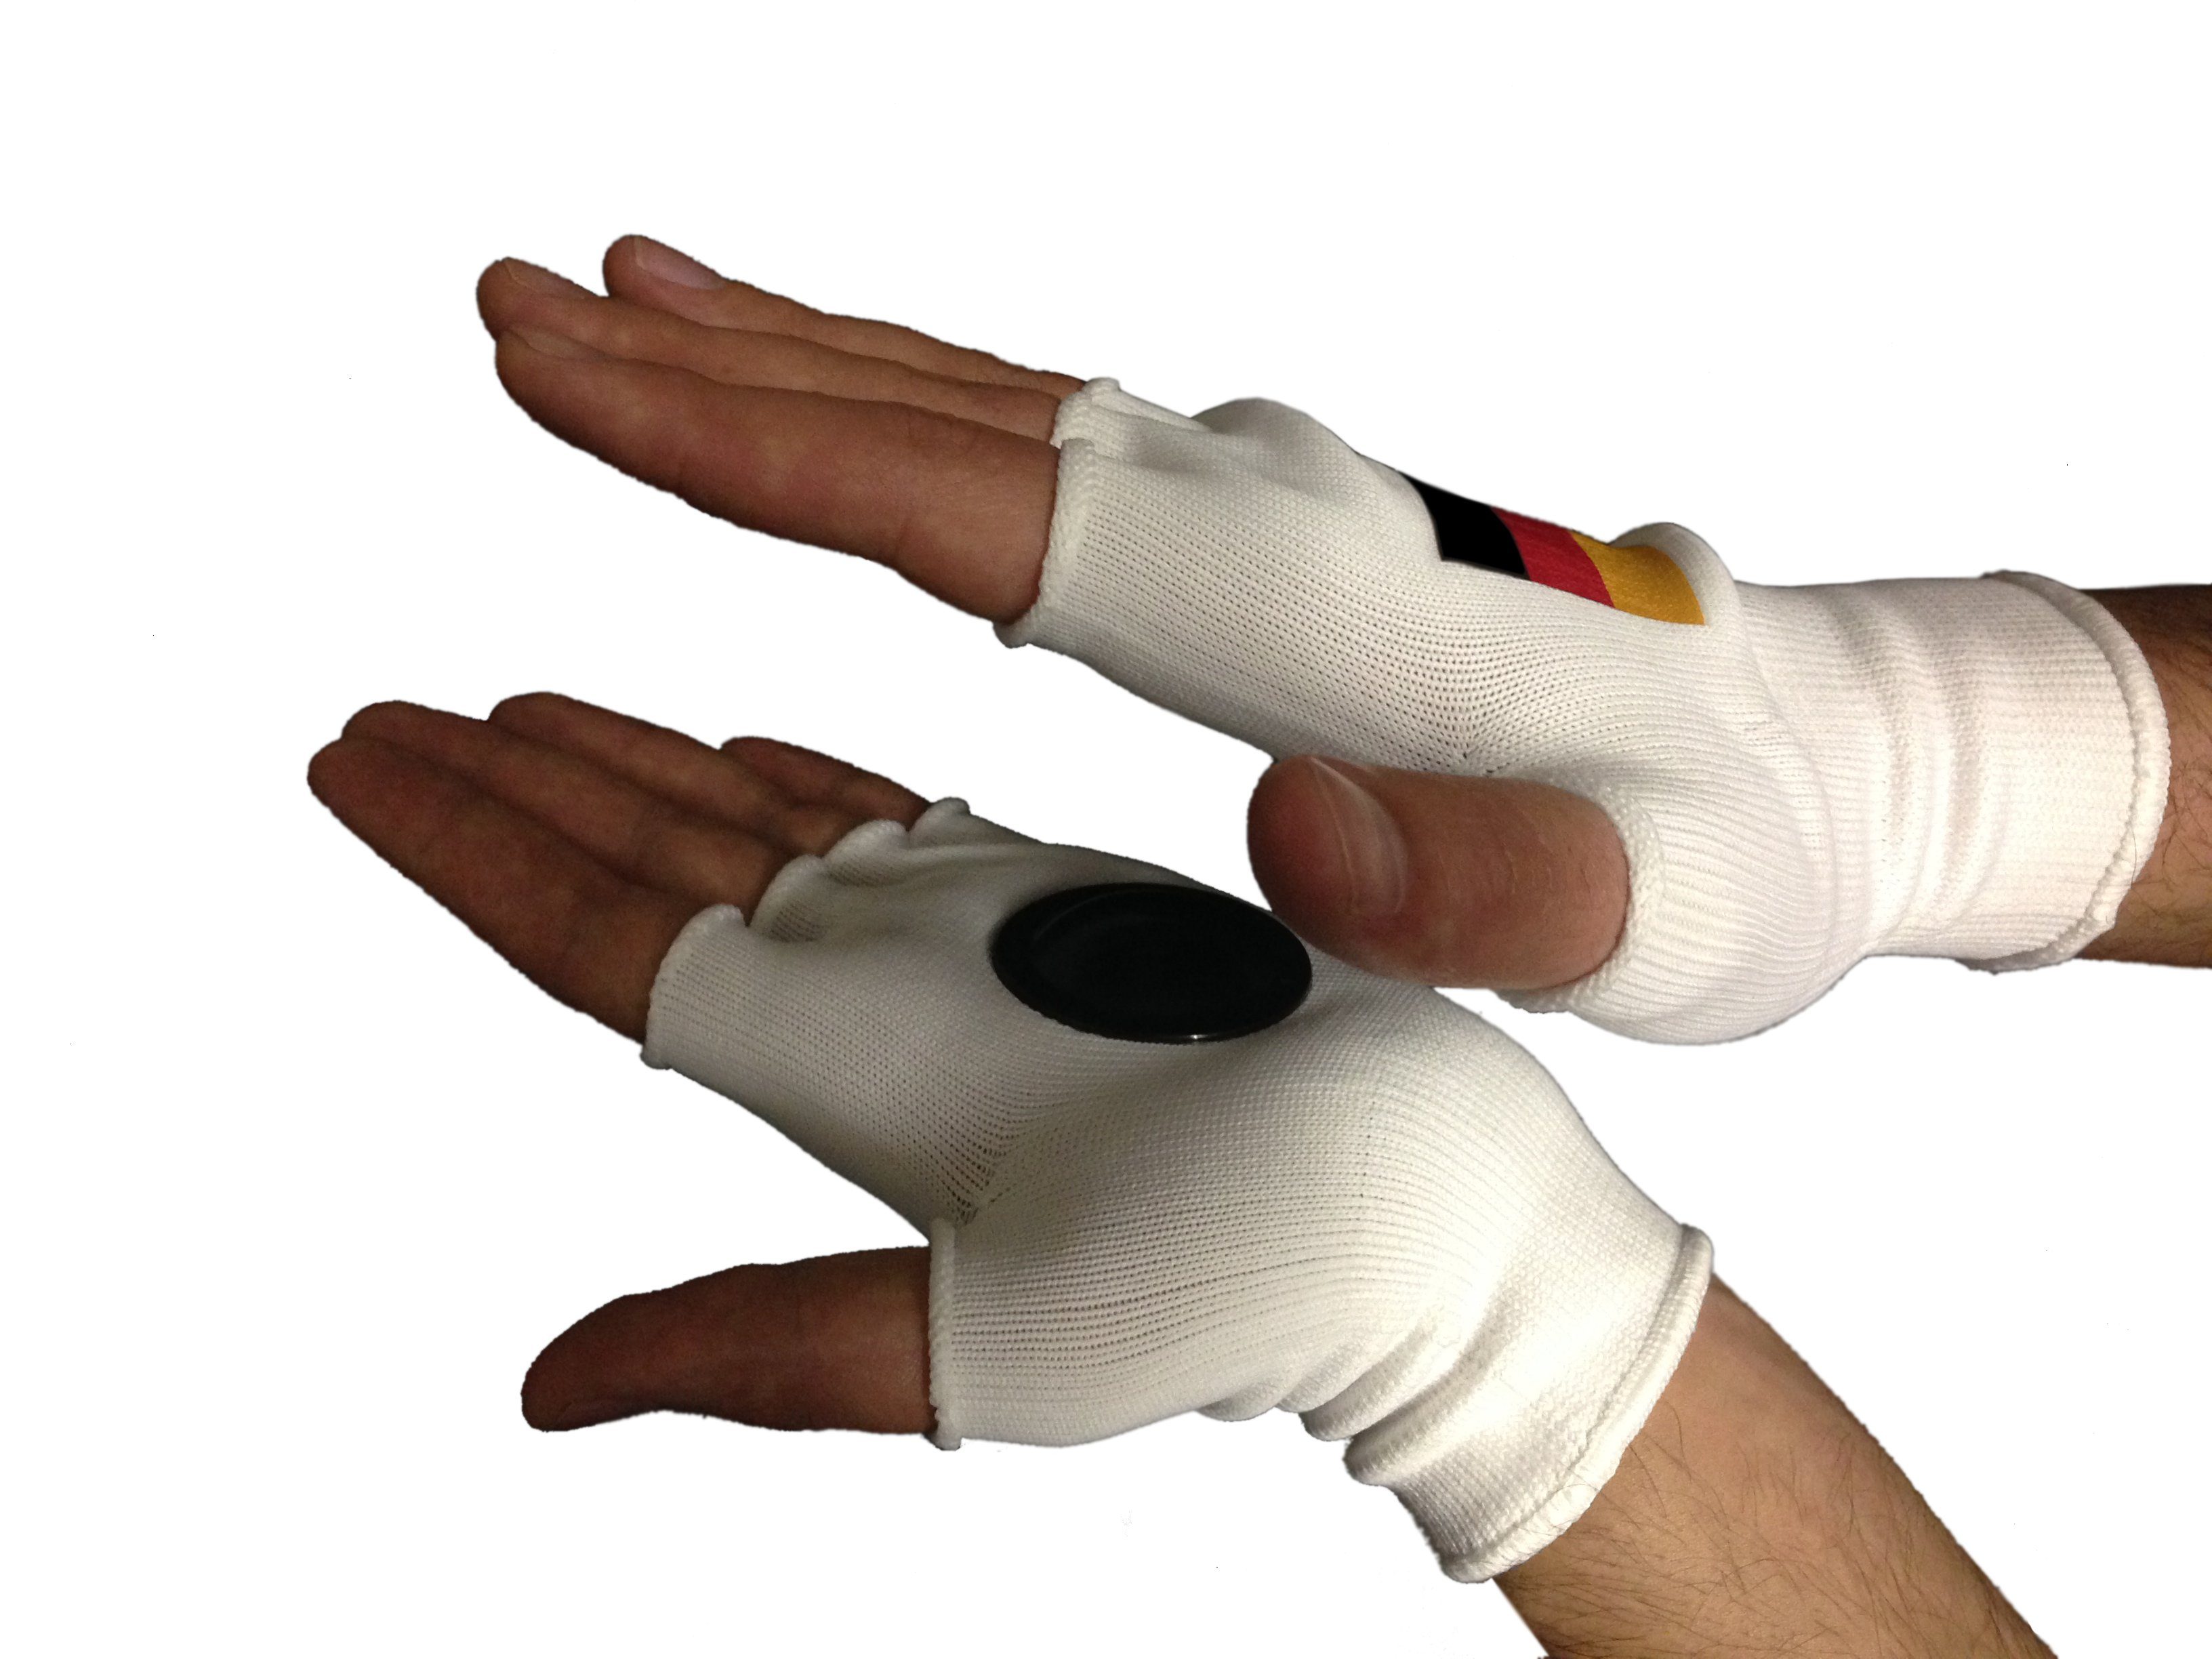 Fahne m. Deutschland in der Gr. Trikot-Handschuhe Handschuhe Handfläche eingenähte trends4cents Clip-Clappers Uni Hartplastik-Halbkugeln Klatsch